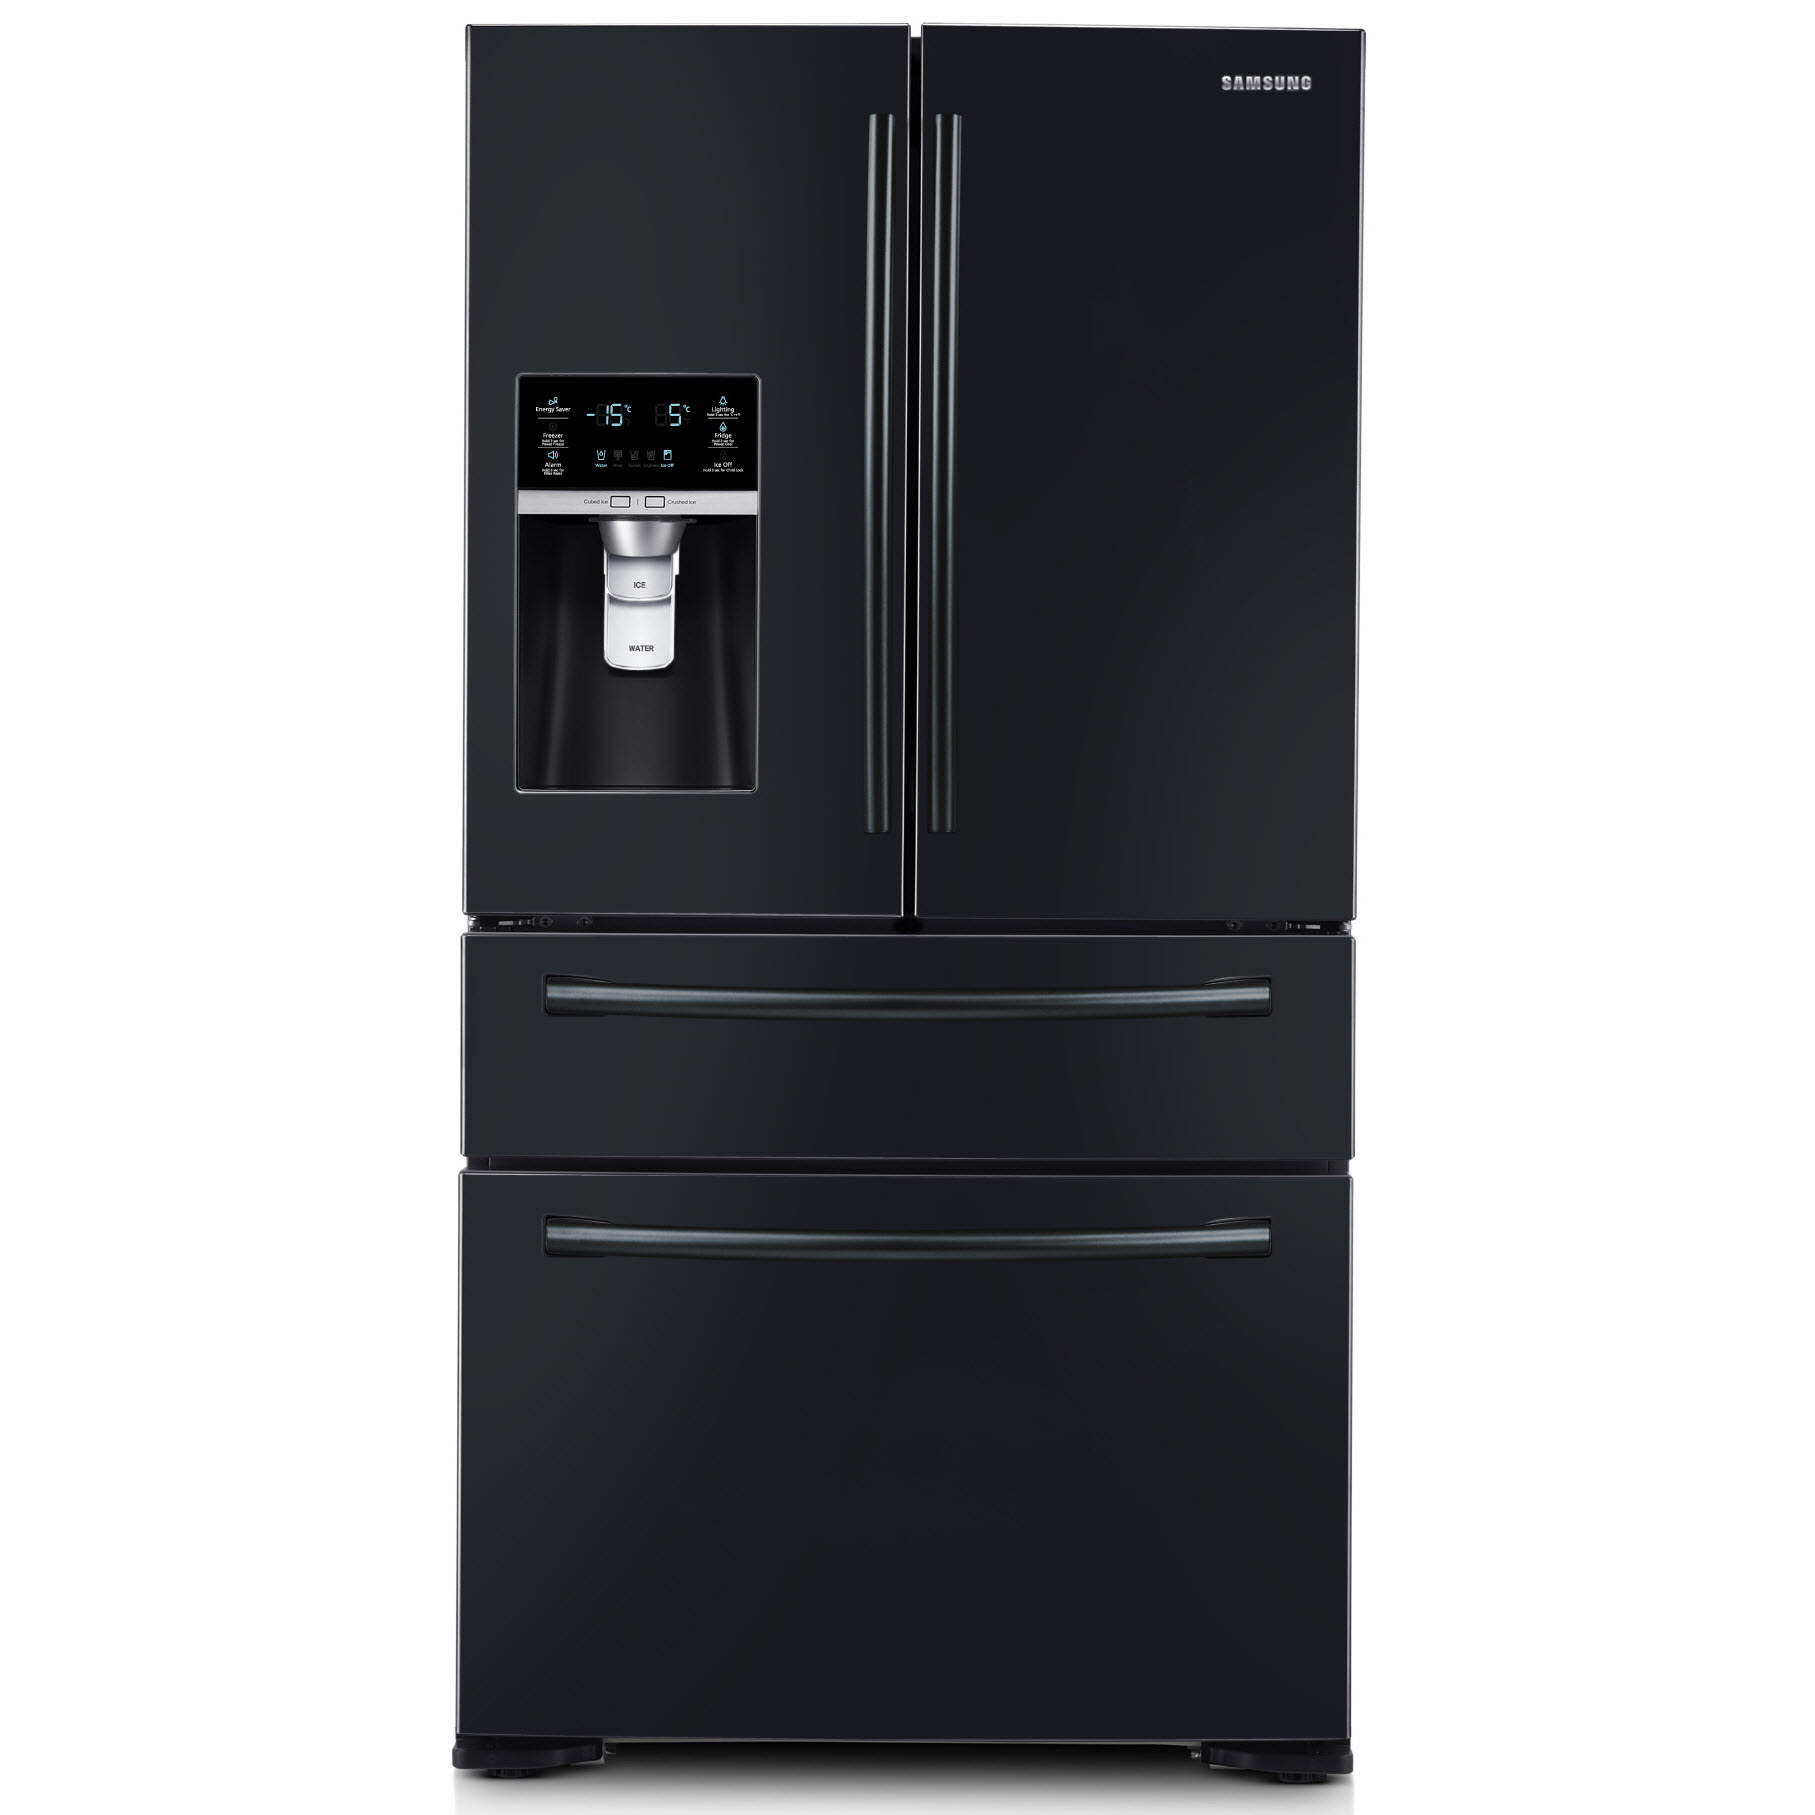 Samsung 31 cu. ft. 4-Door Refrigerator - Black